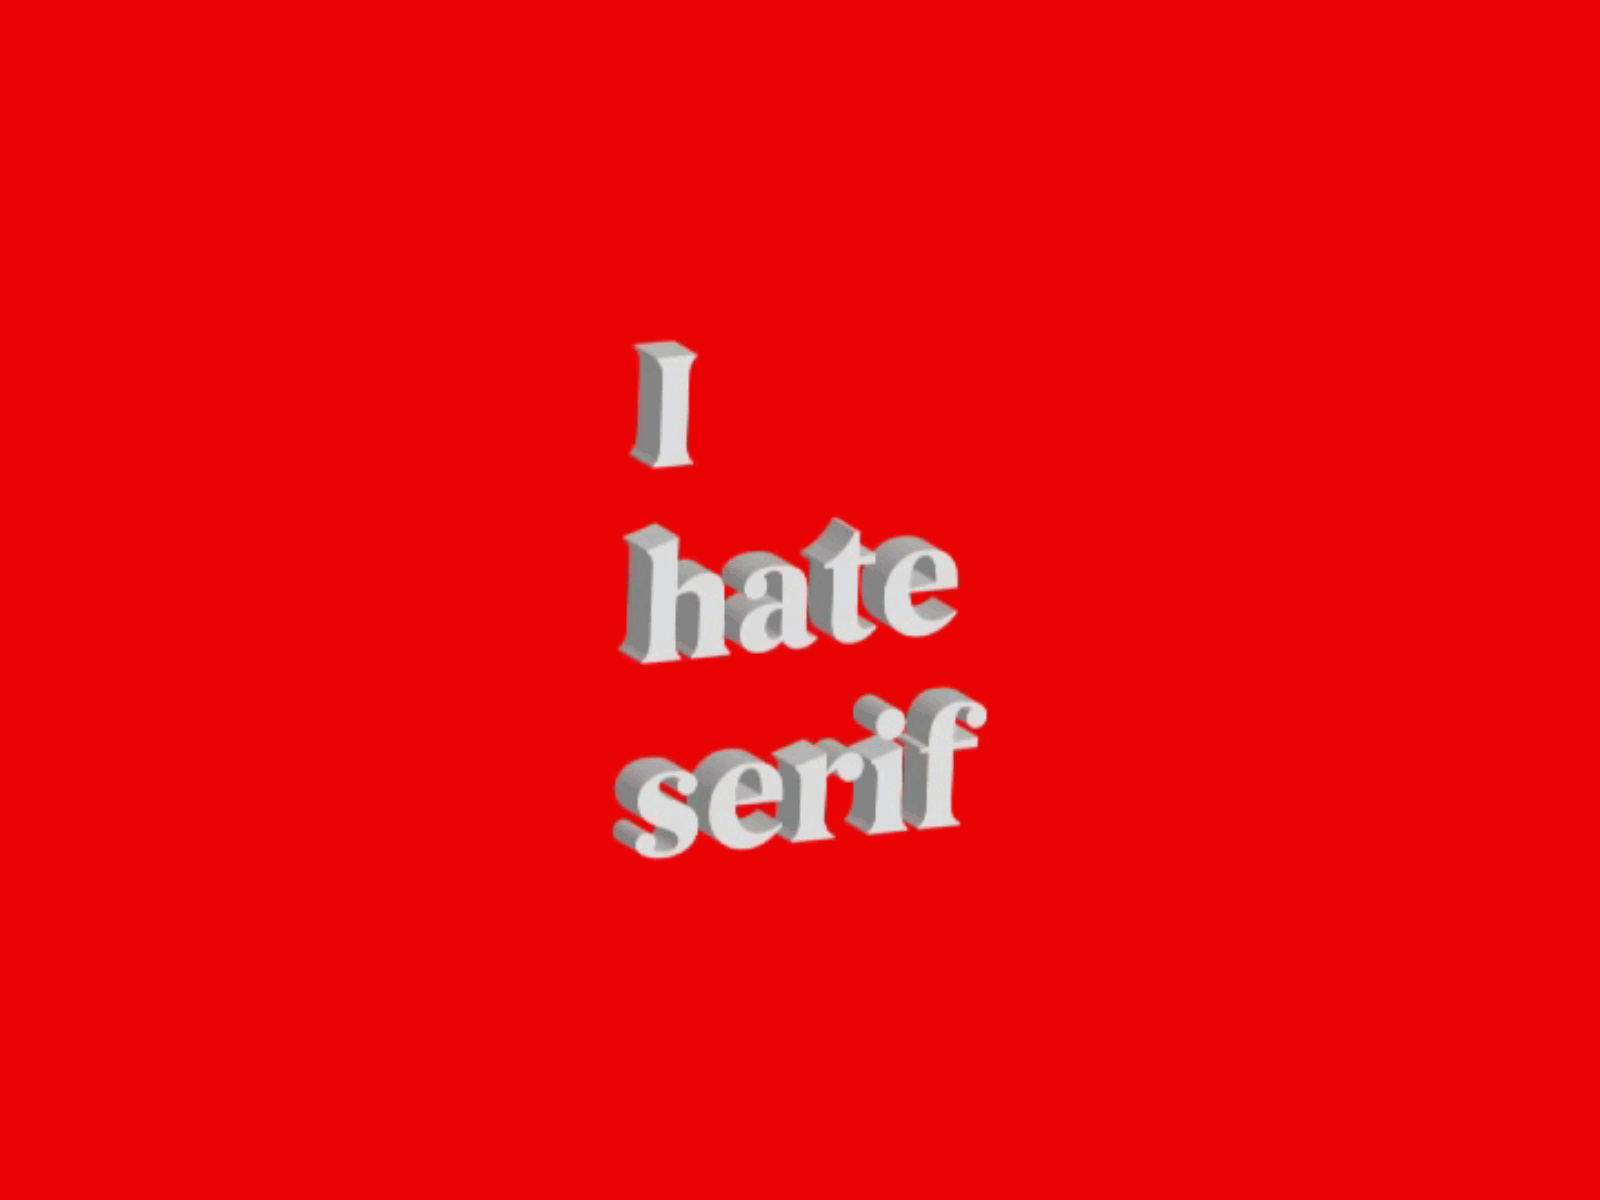 I hate serifs animation exploration motion poster serif typeface serifs